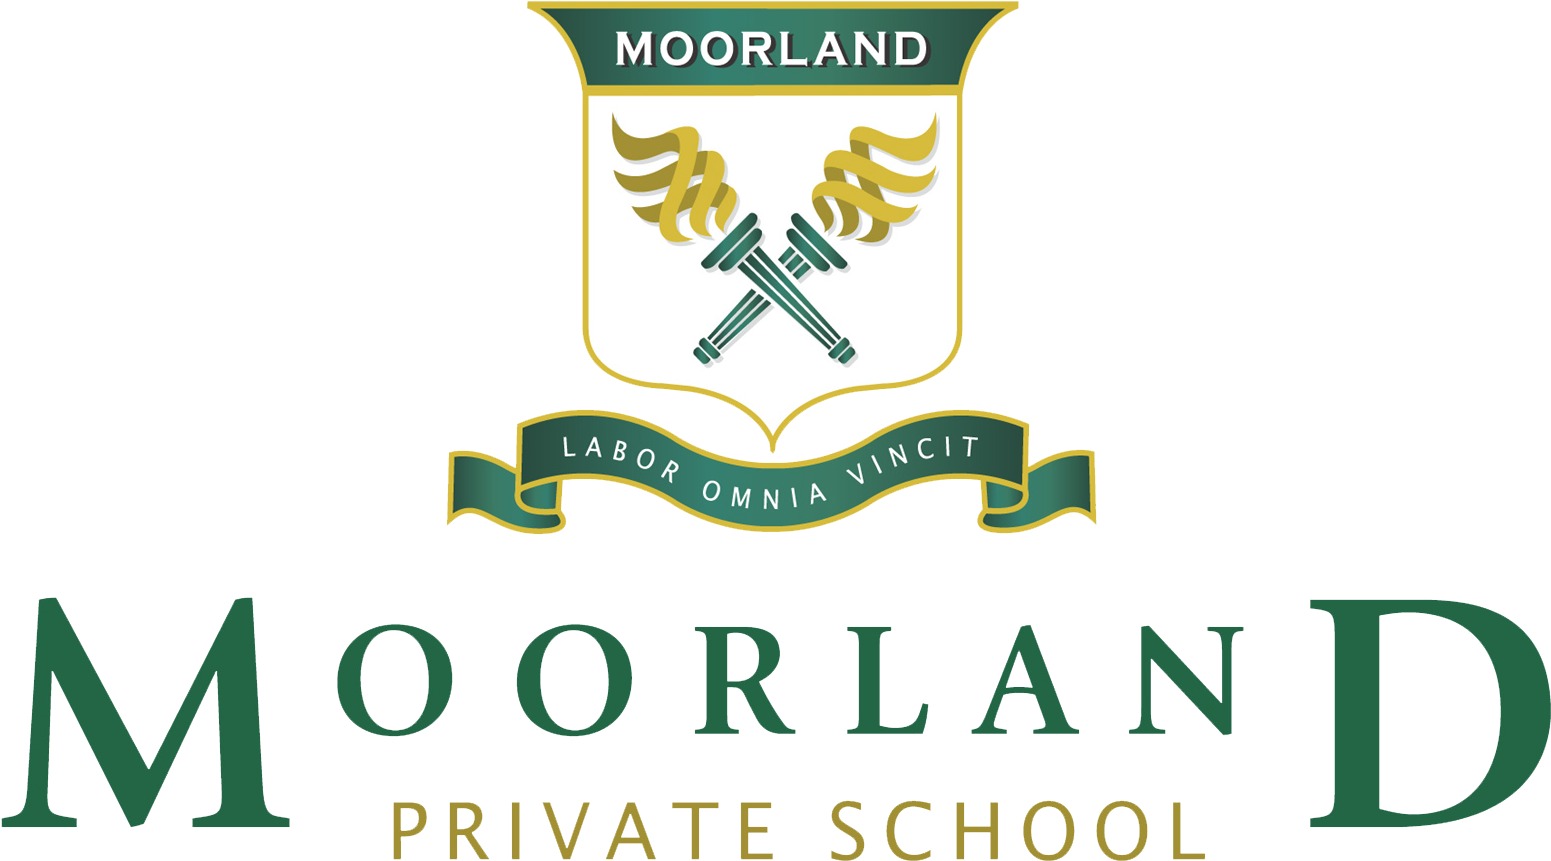 Moorland Private School, Lancashire - Moorland School (1594x1072)